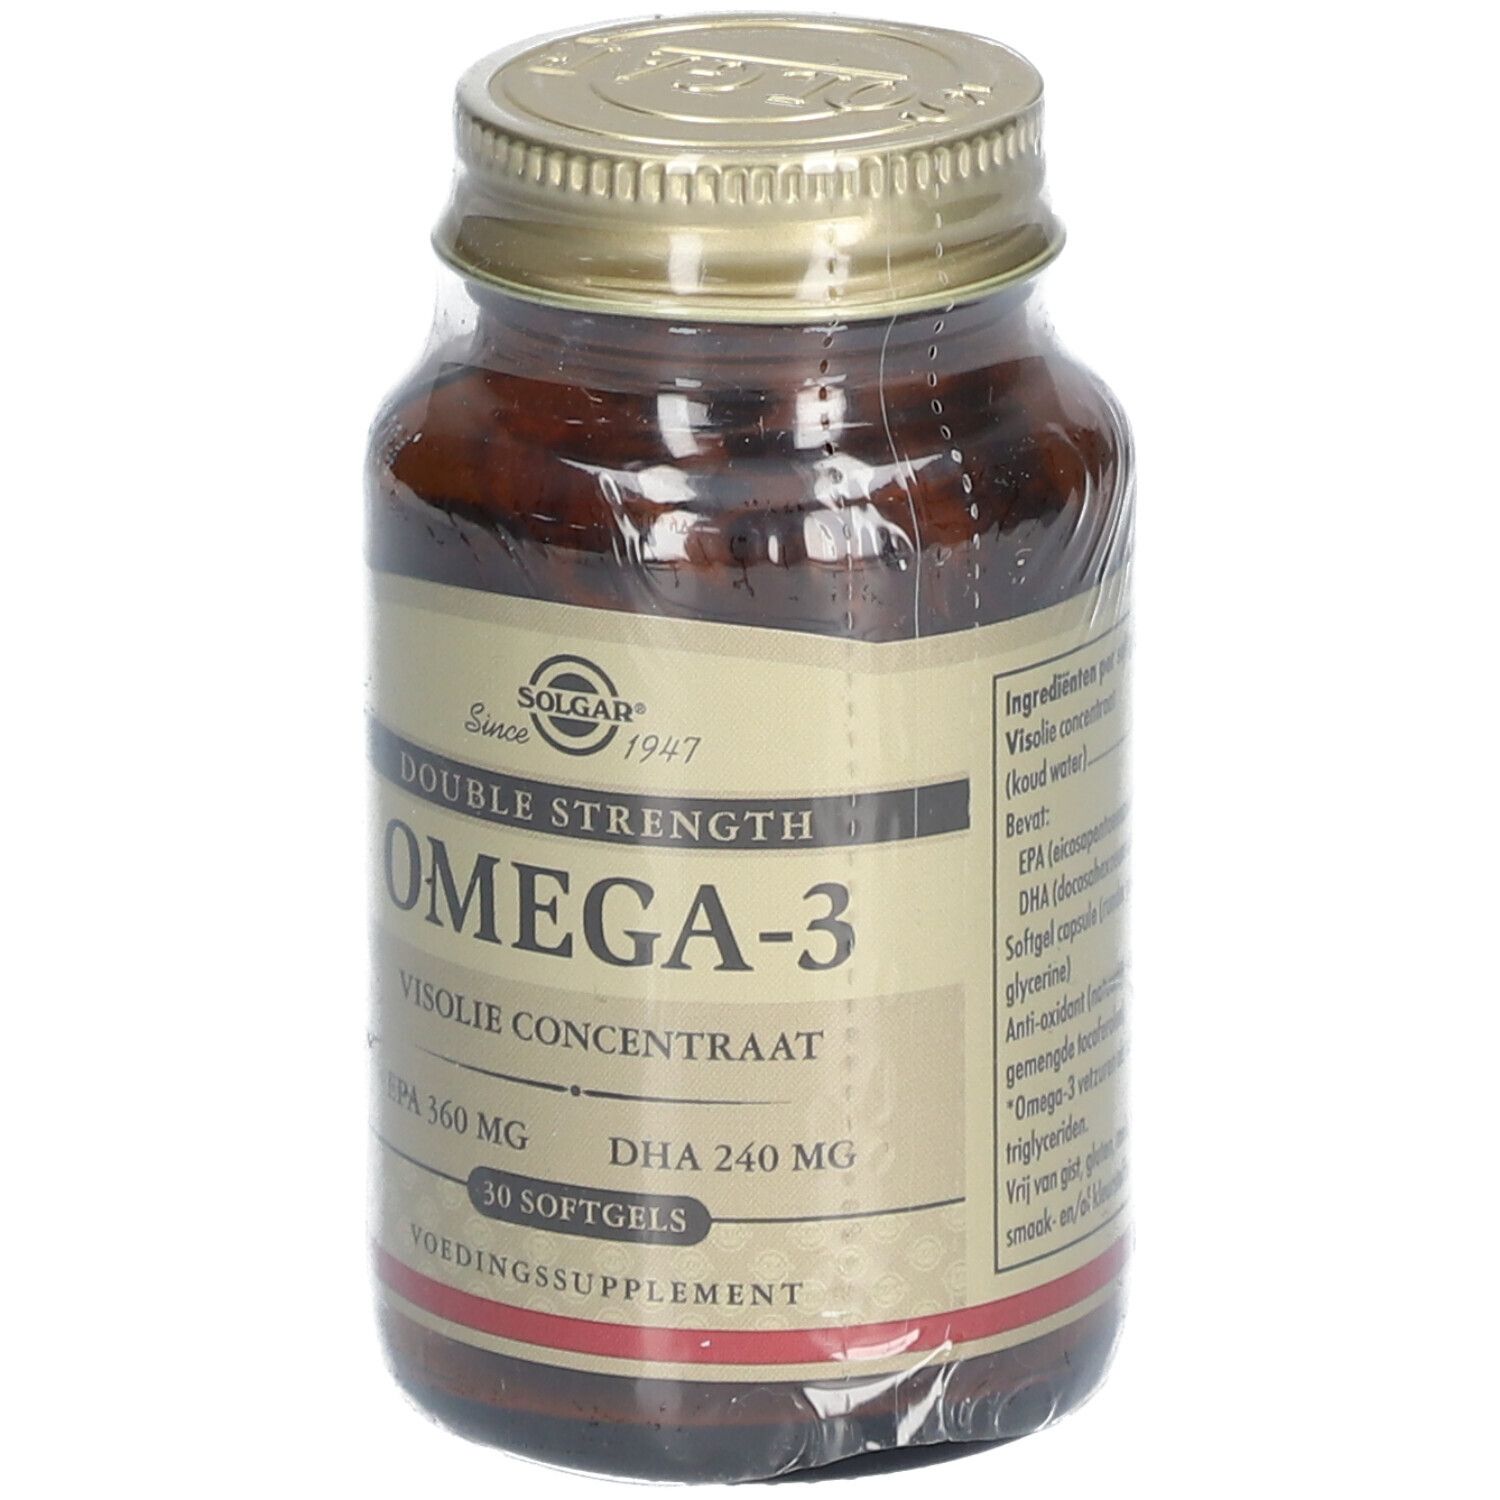 SOLGAR® Omega- 3 Double Strength